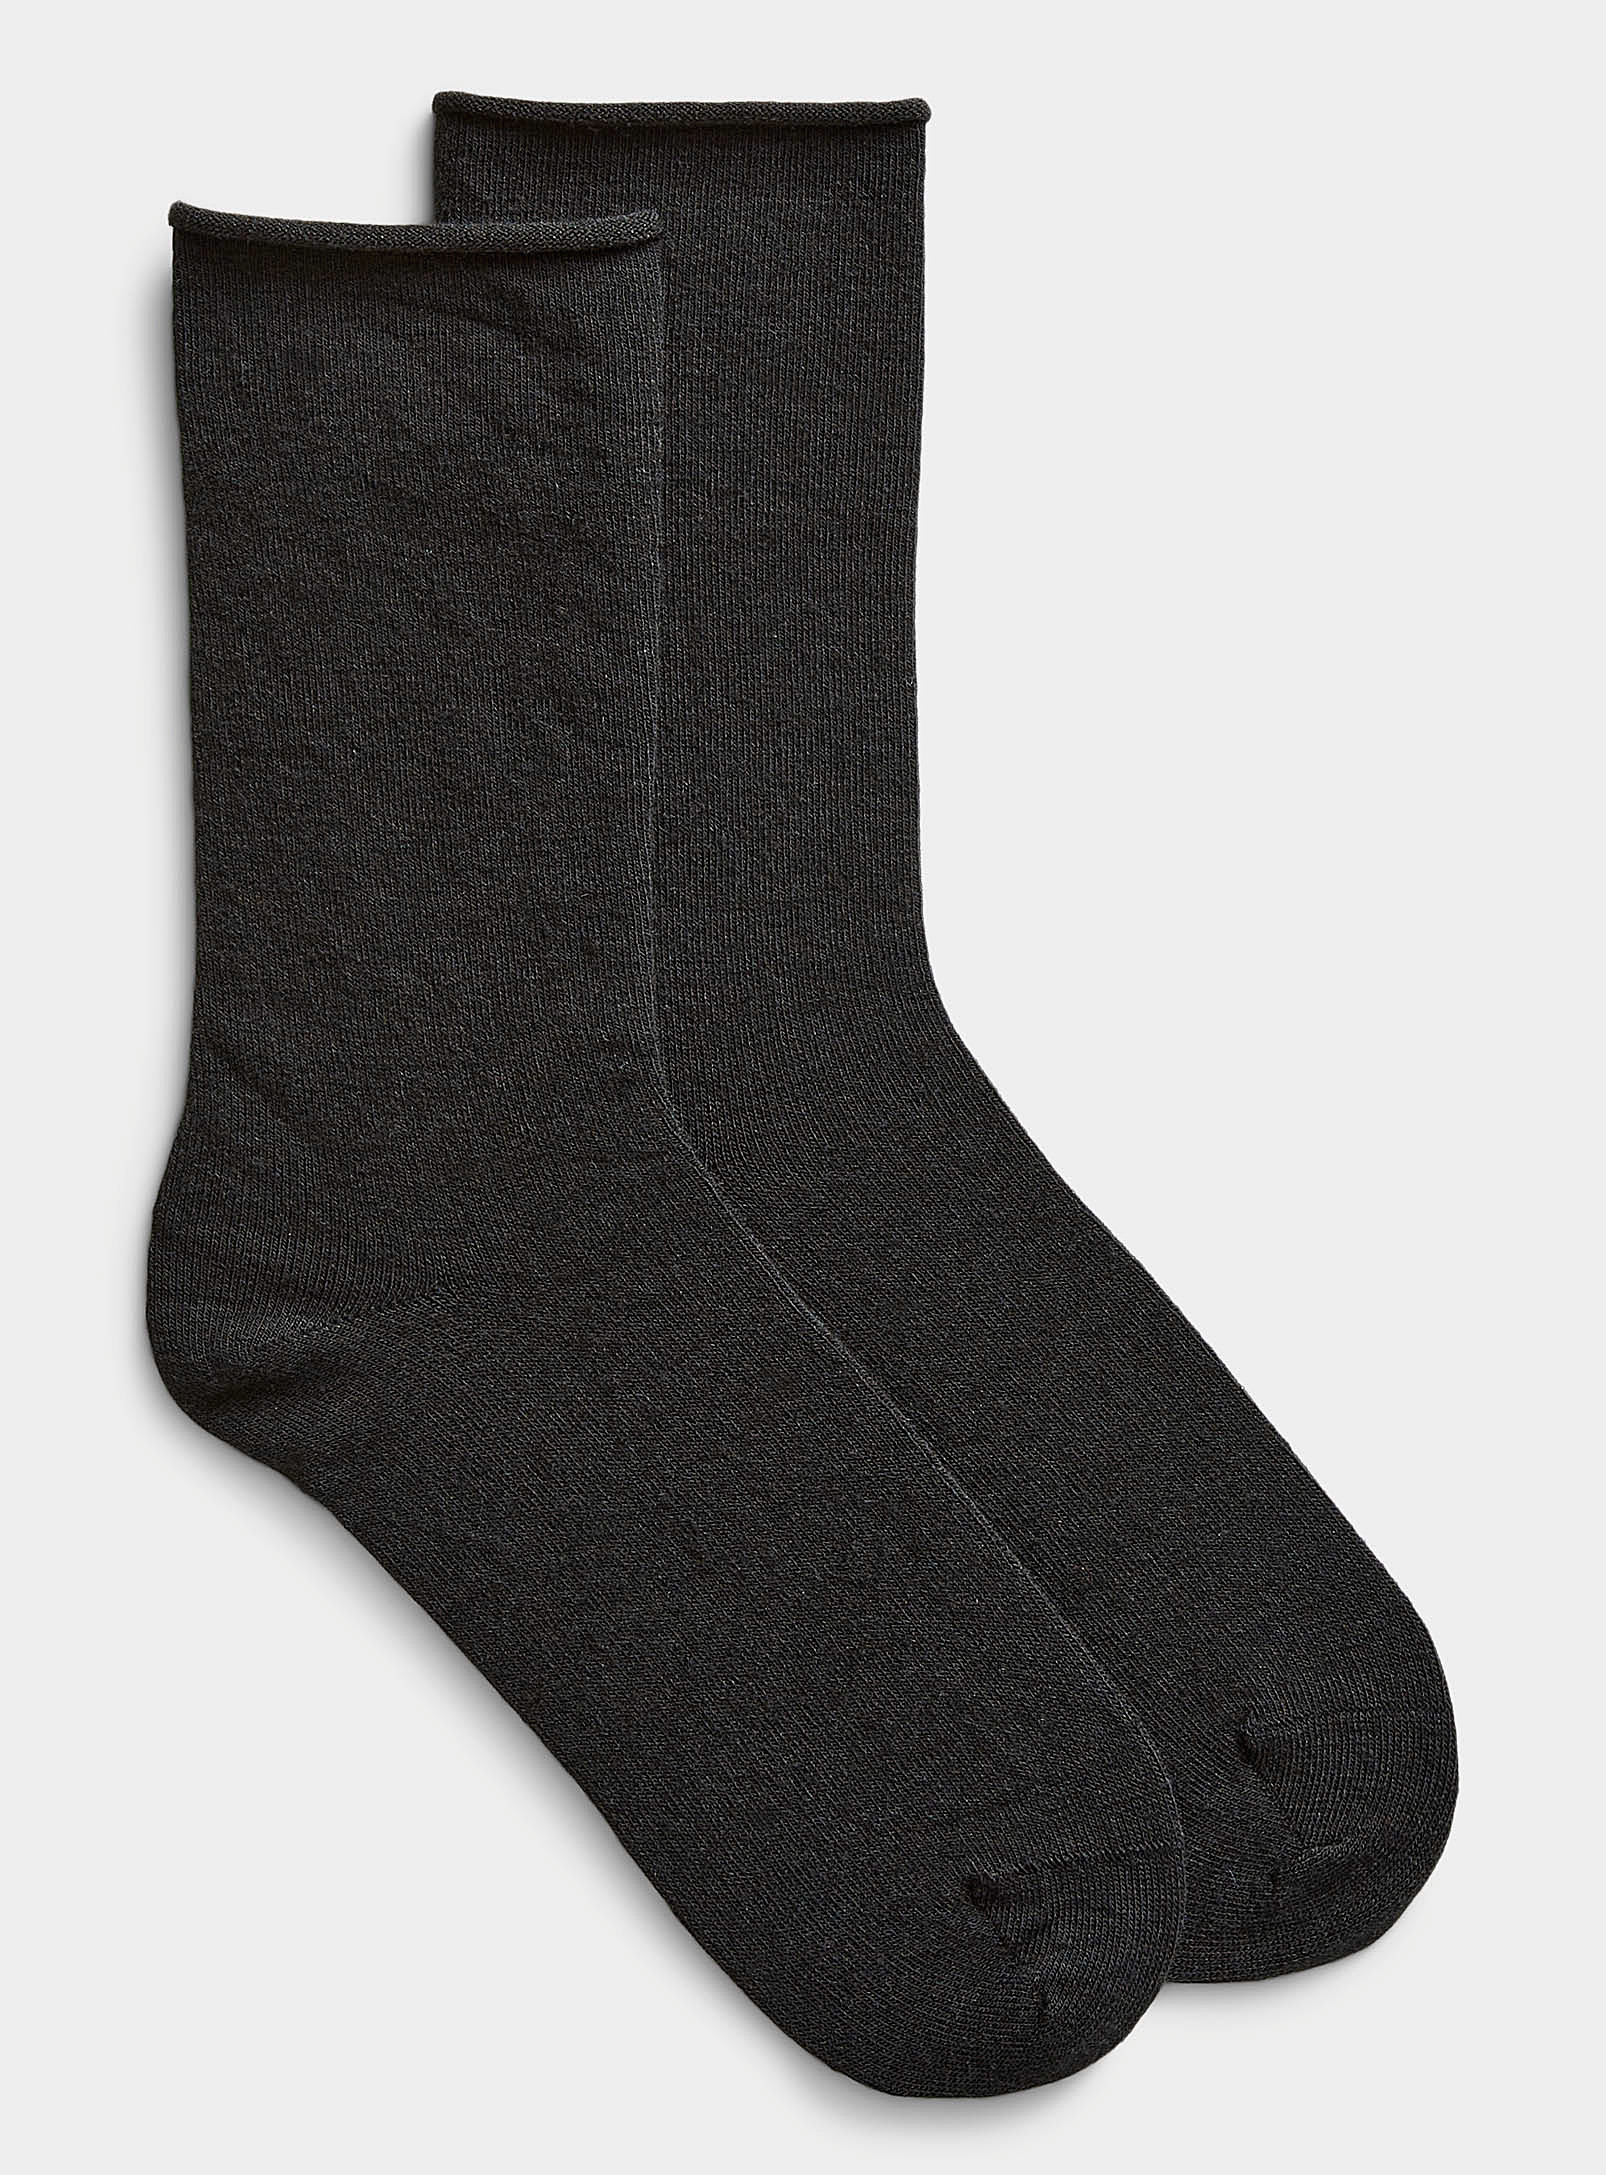 Simons - Women's Minimalist solid merino wool socks